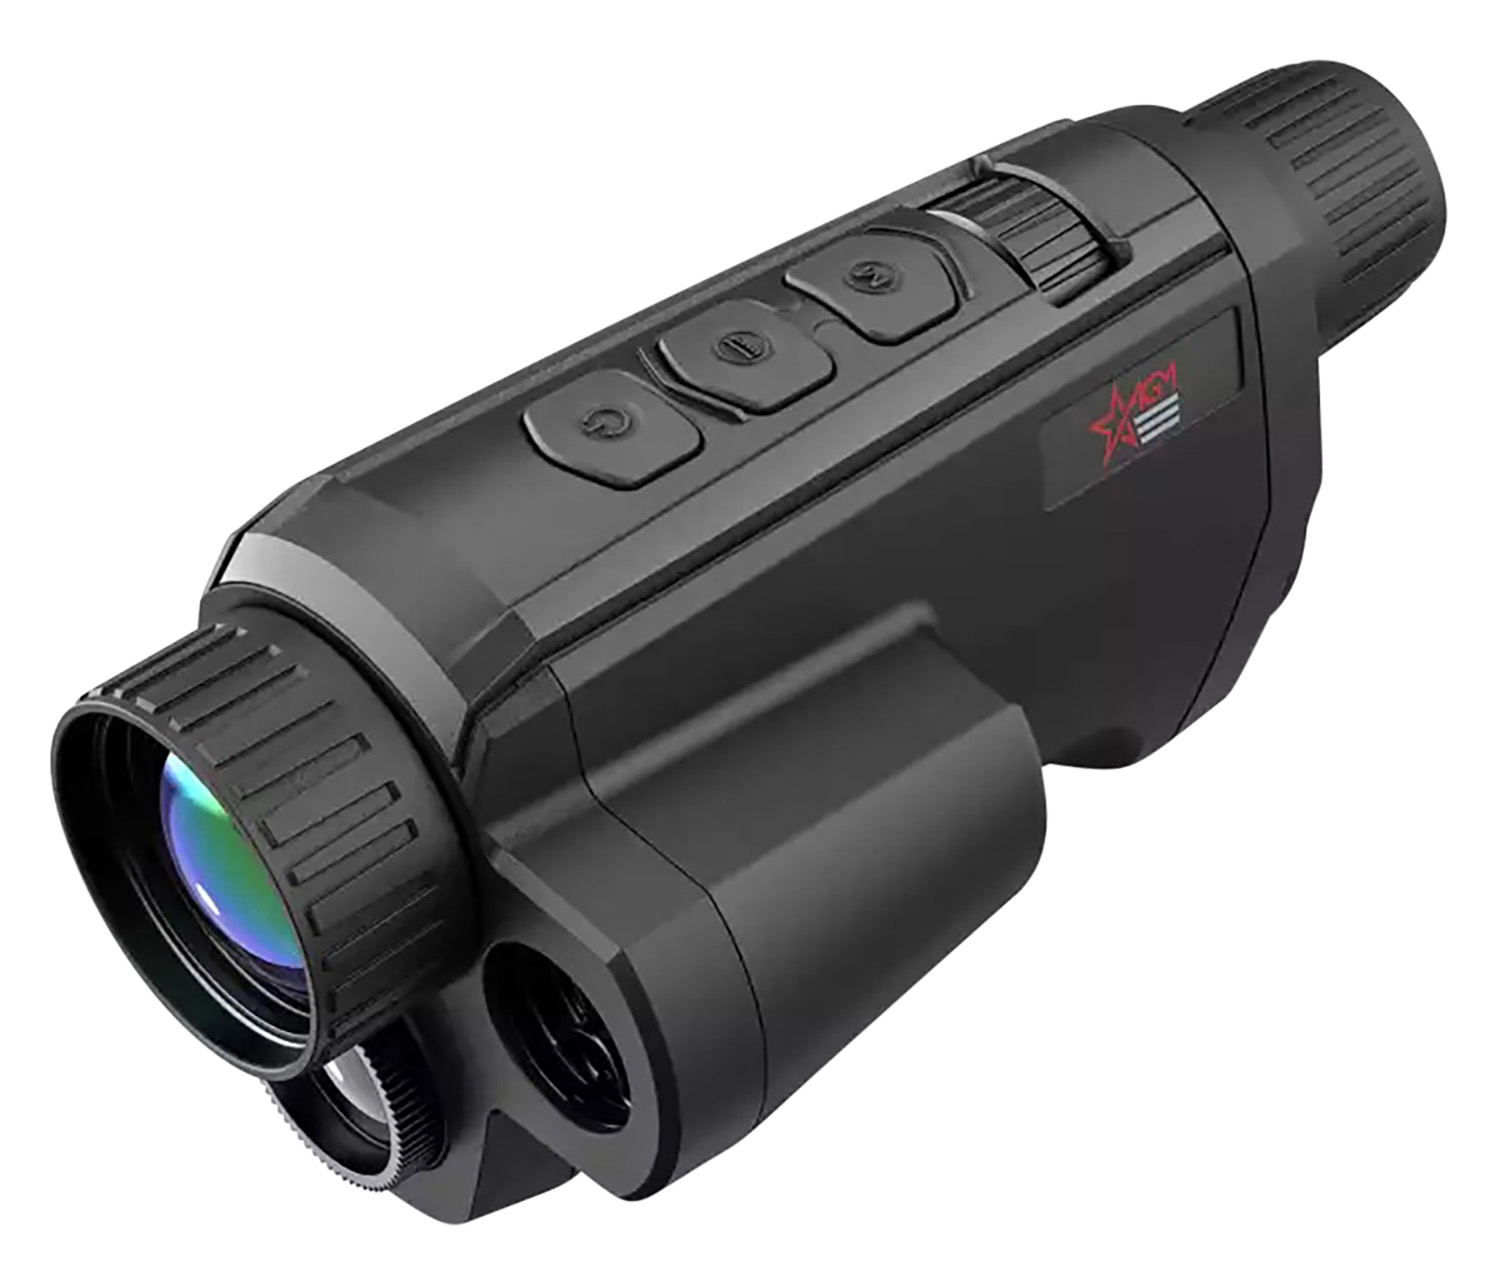 AGM Global Vision 3142551305FM31 Fuzion LRF TM35-640 Thermal Monocular Black 2-16x 35mm 640x512, 50 Hz Resolution 1x/2x/4x/8x Zoom Features Rangefinder